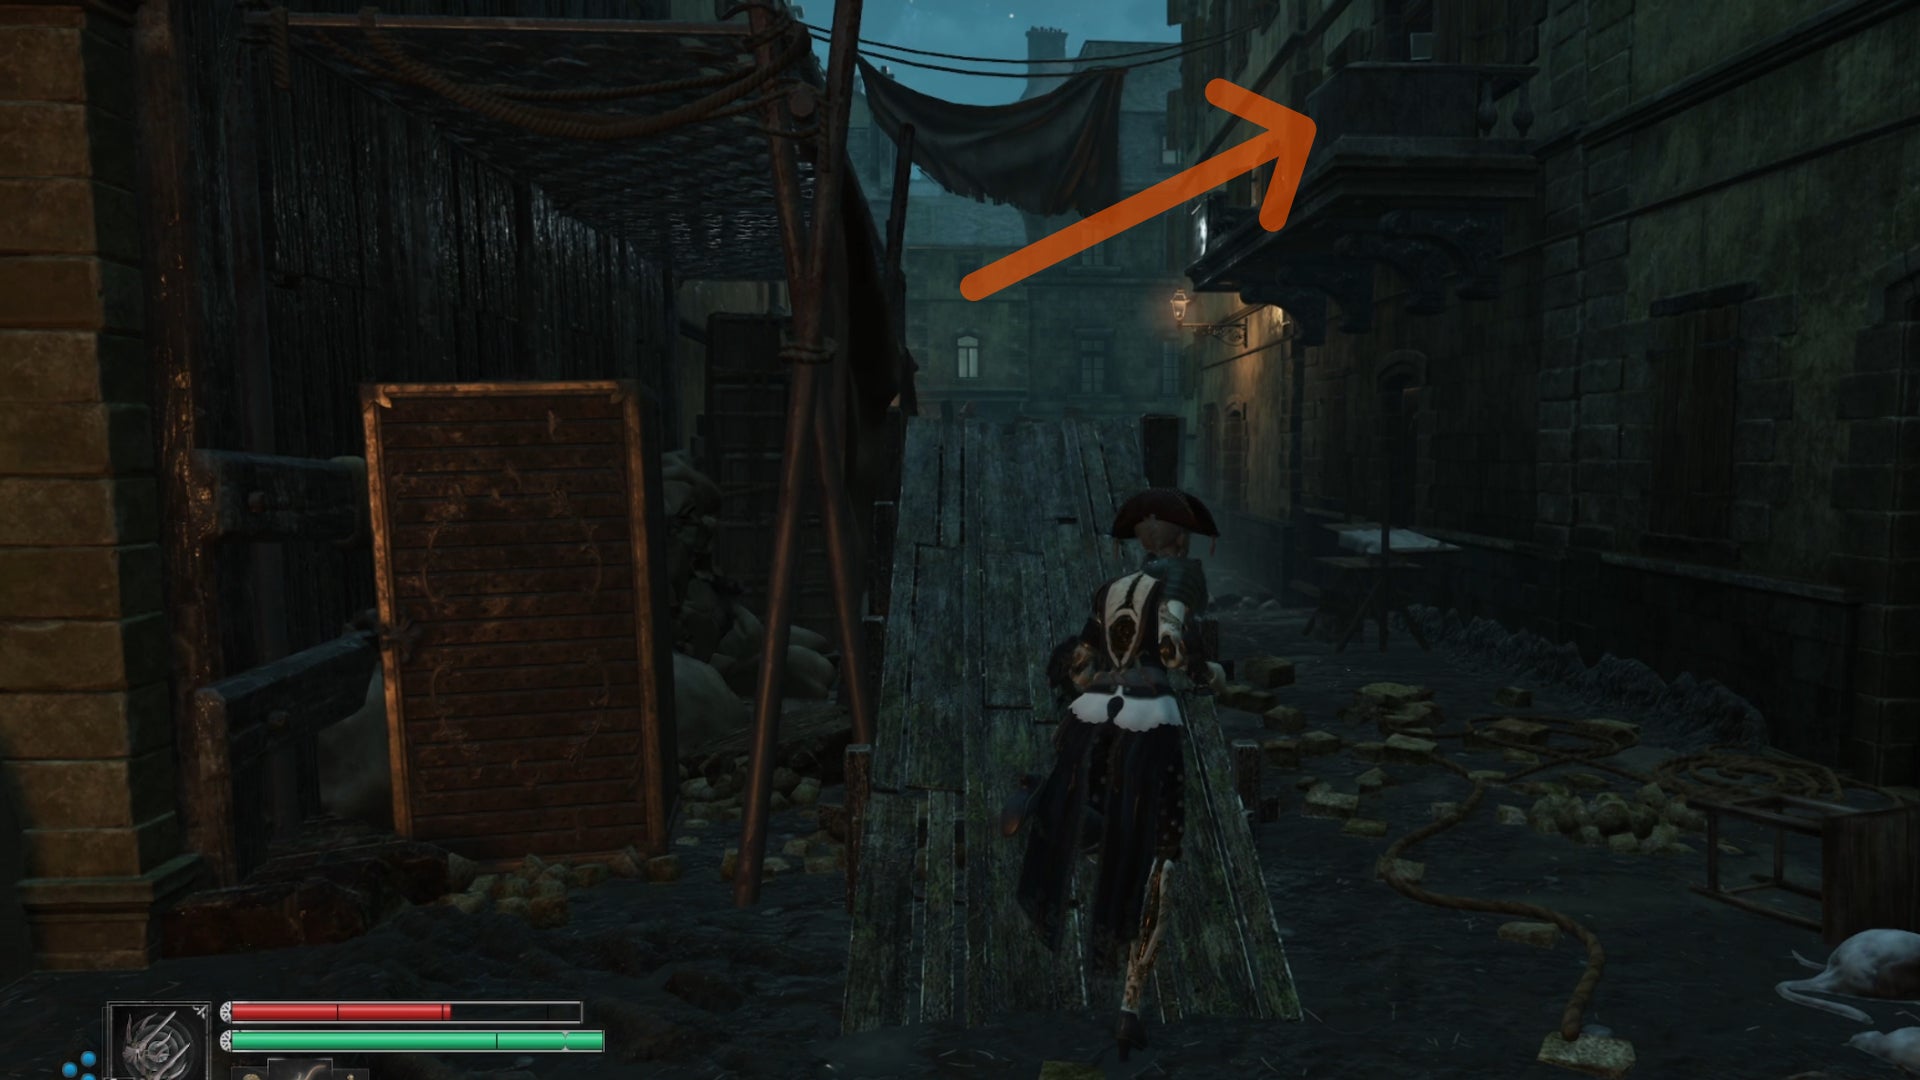 Aegis in Steelrising climbs a ramp in an alleyway.